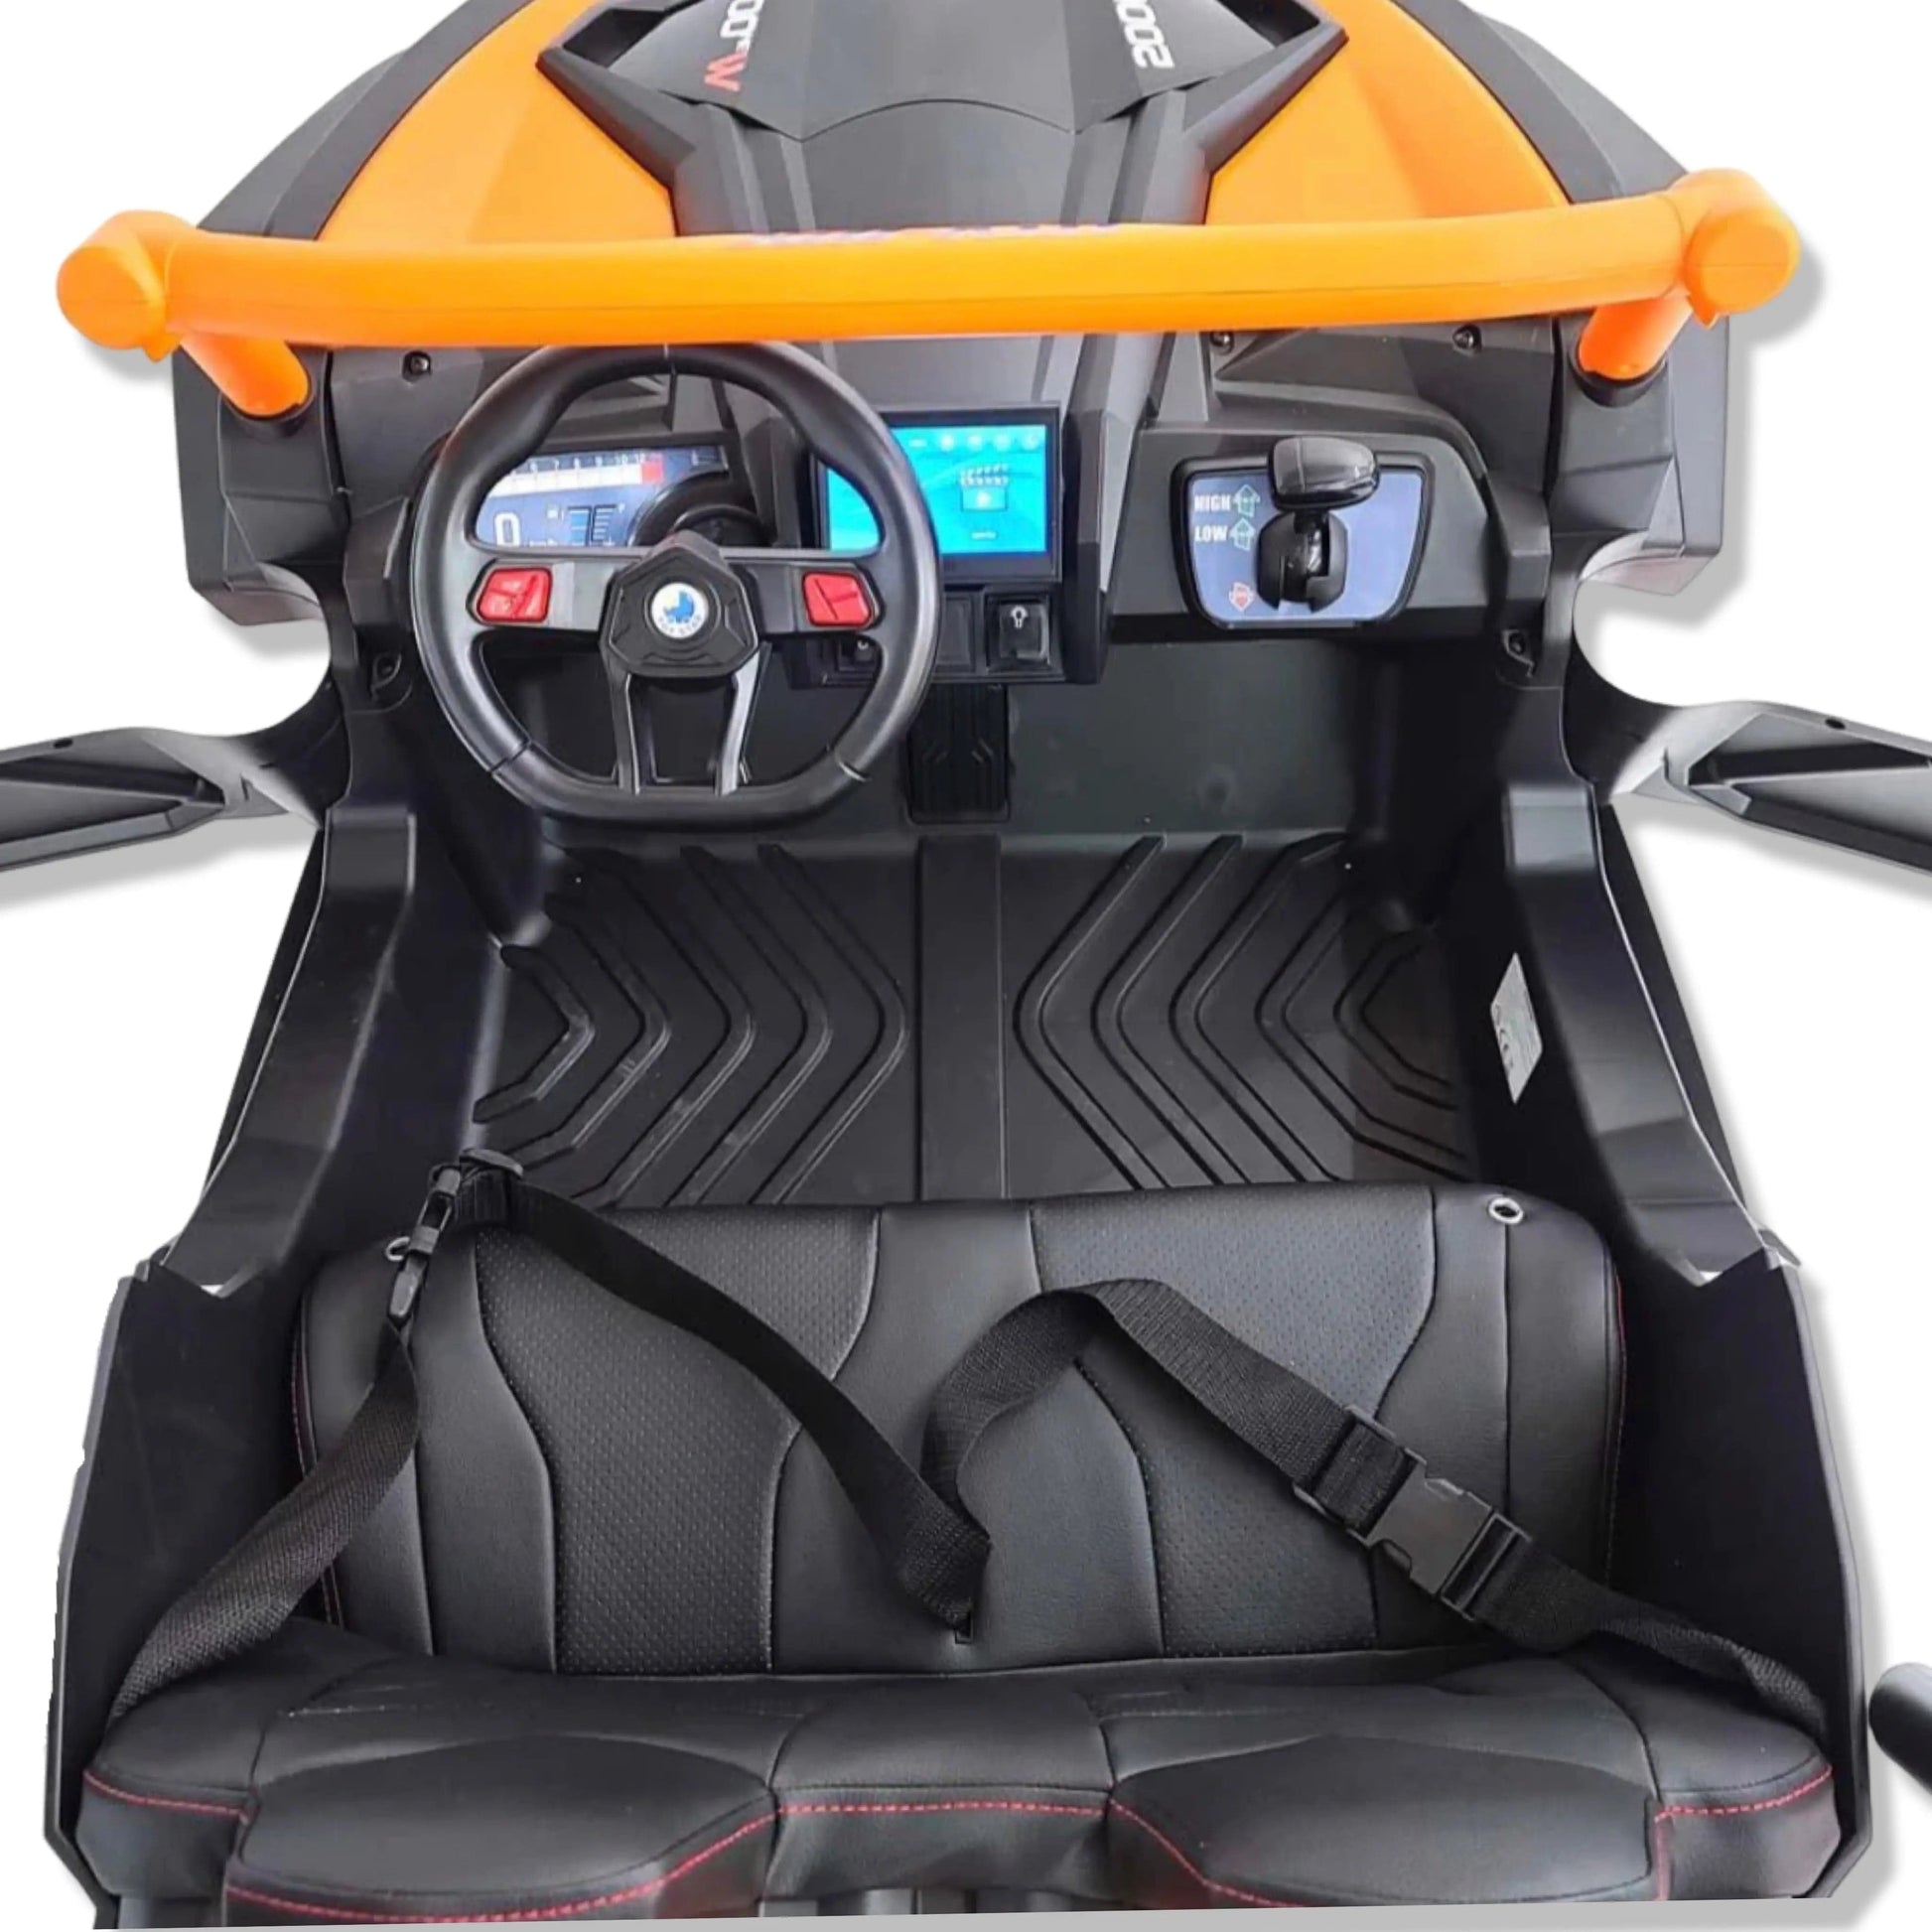 24V 2-Seater XXL UTV Electric Ride On Kid Car Power Wheel R&G TOYS